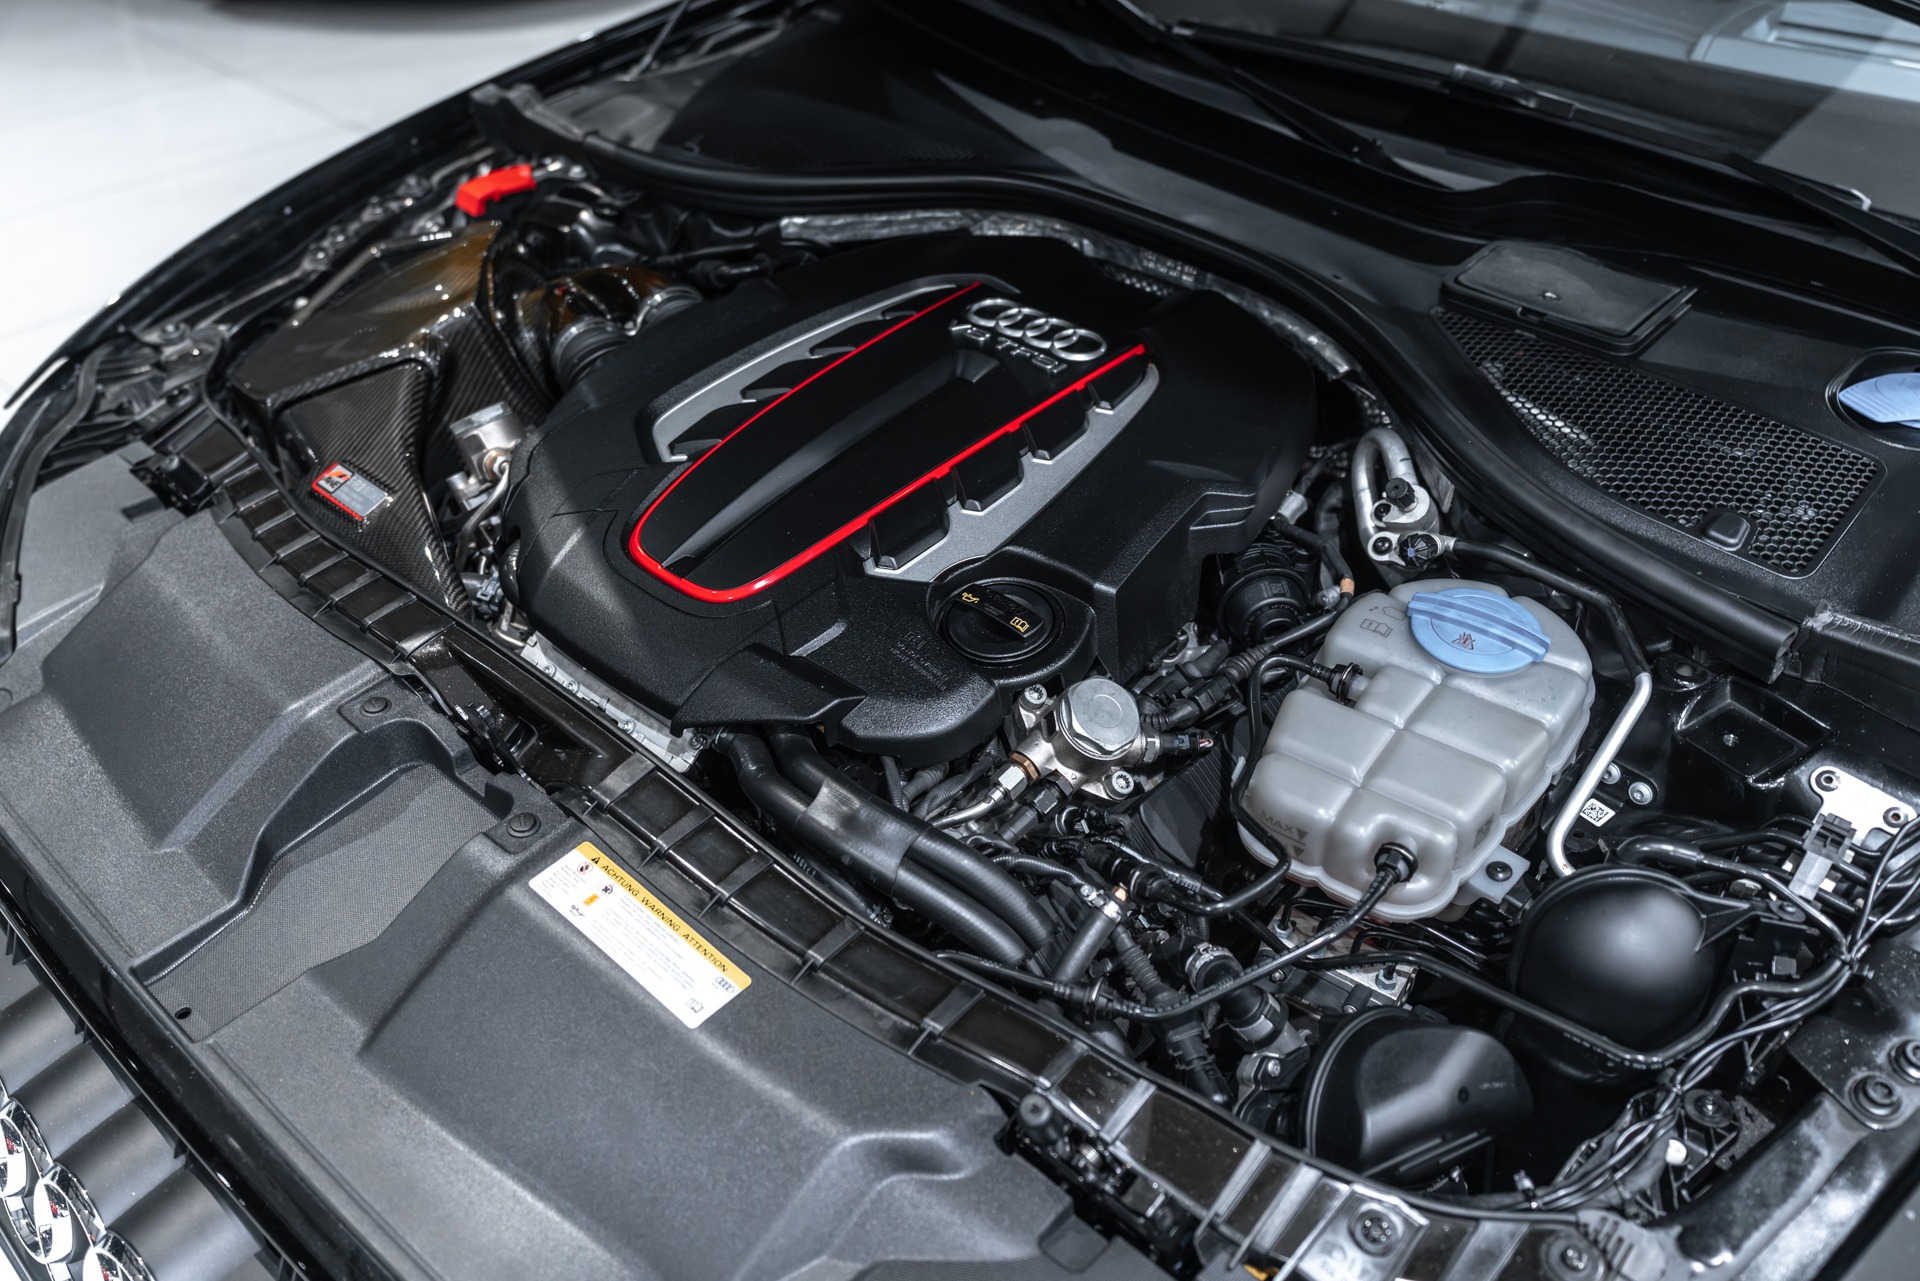 Used-2018-Audi-S6-40T-quattro-Prestige-Sedan-Built-Silly-Rabbit-Upgrades-APR-K40-1-Owner-Car-Clean-CarFax